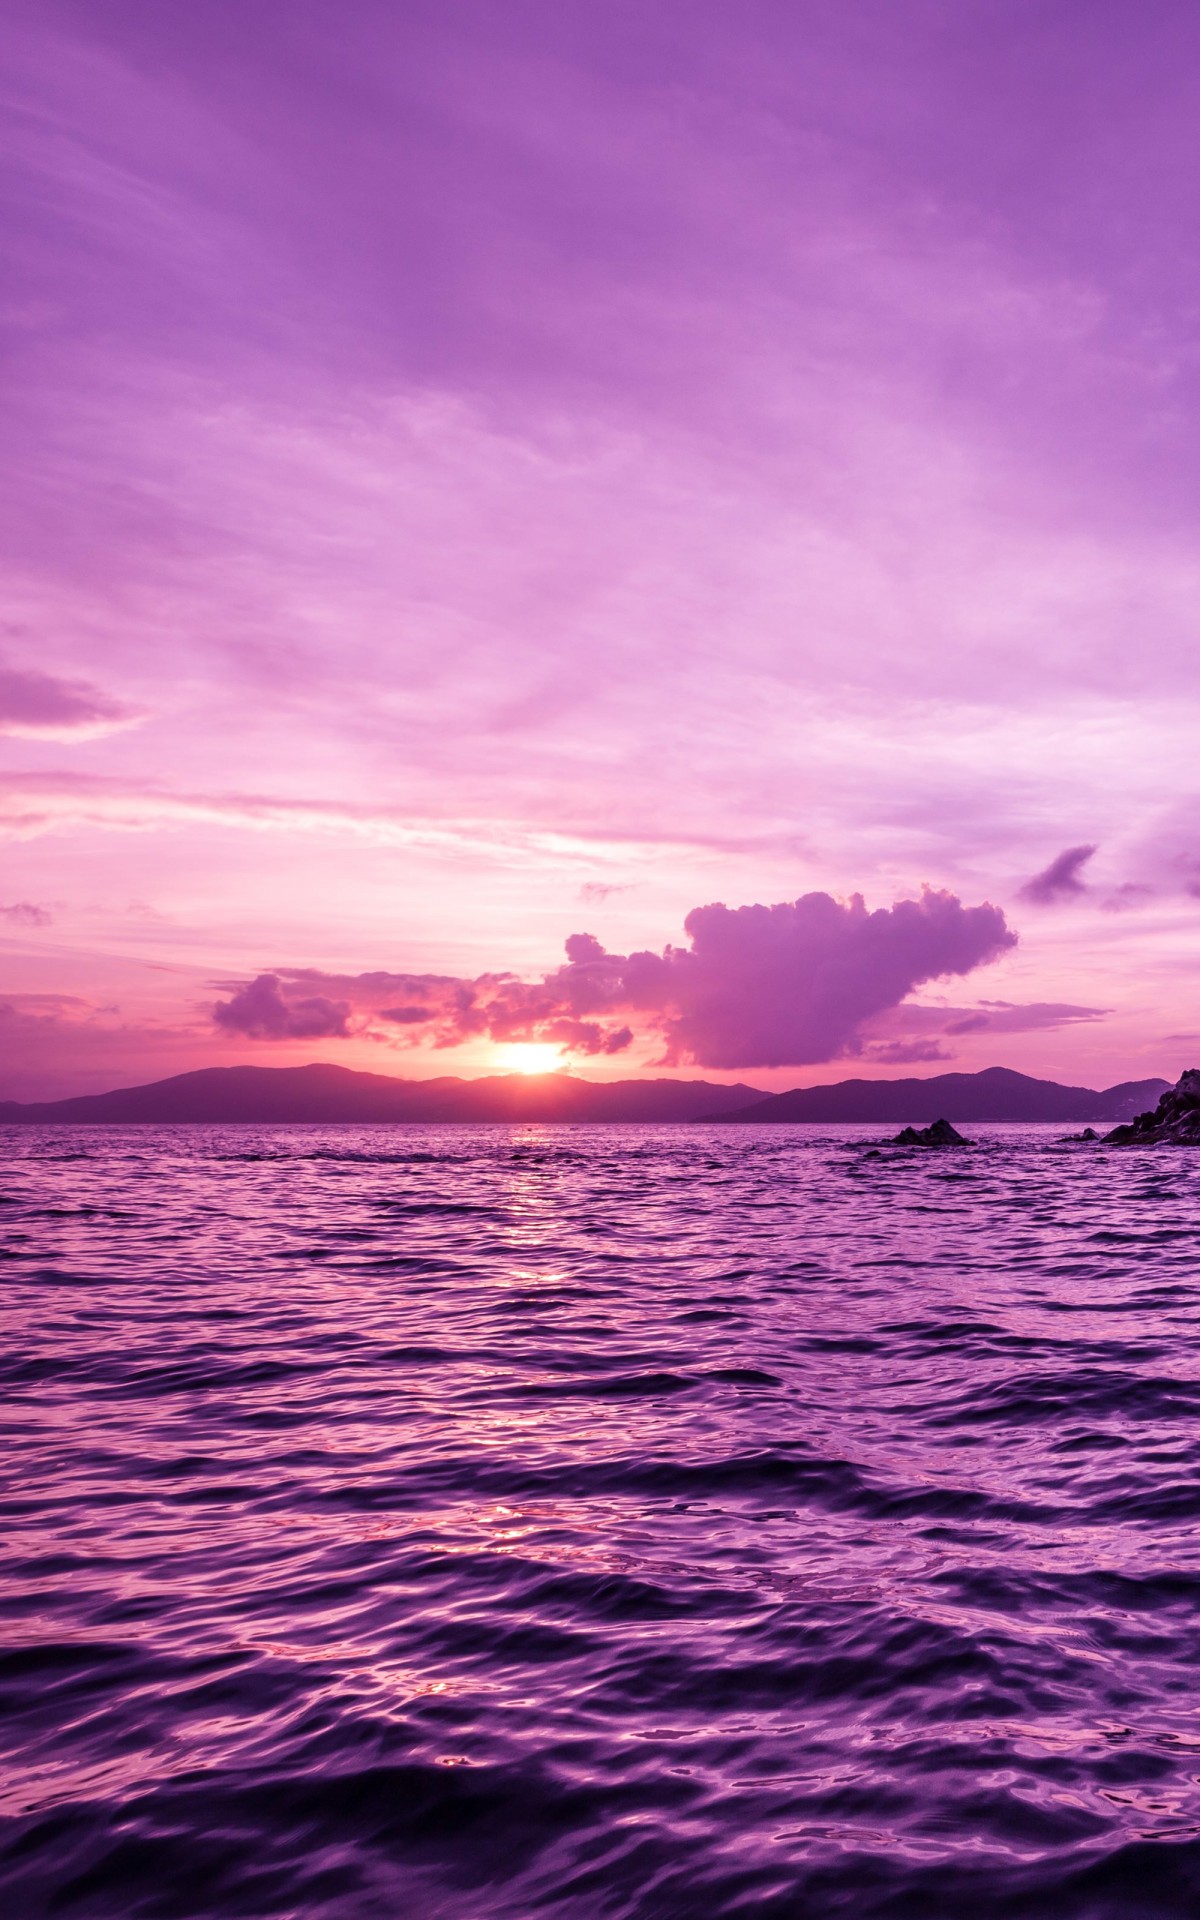 Pelican Island Sunset, British Virgin Islands Wallpaper for Amazon Kindle Fire HDX